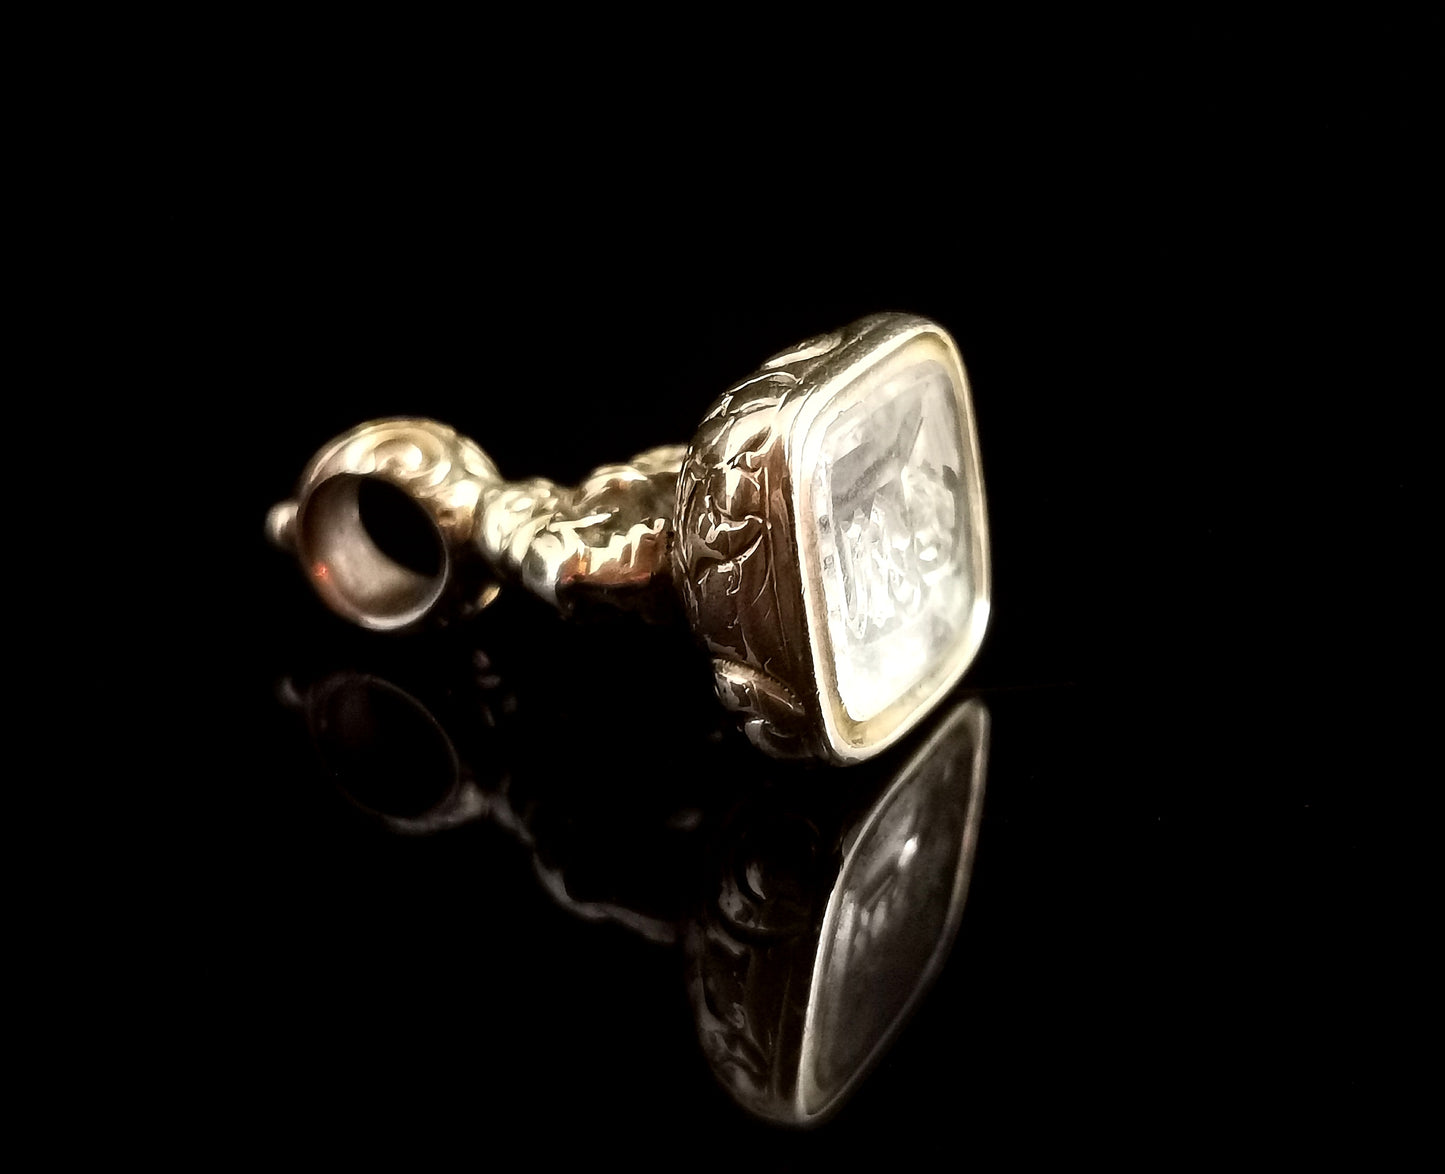 Antique Georgian seal fob pendant, rolled gold and quartz